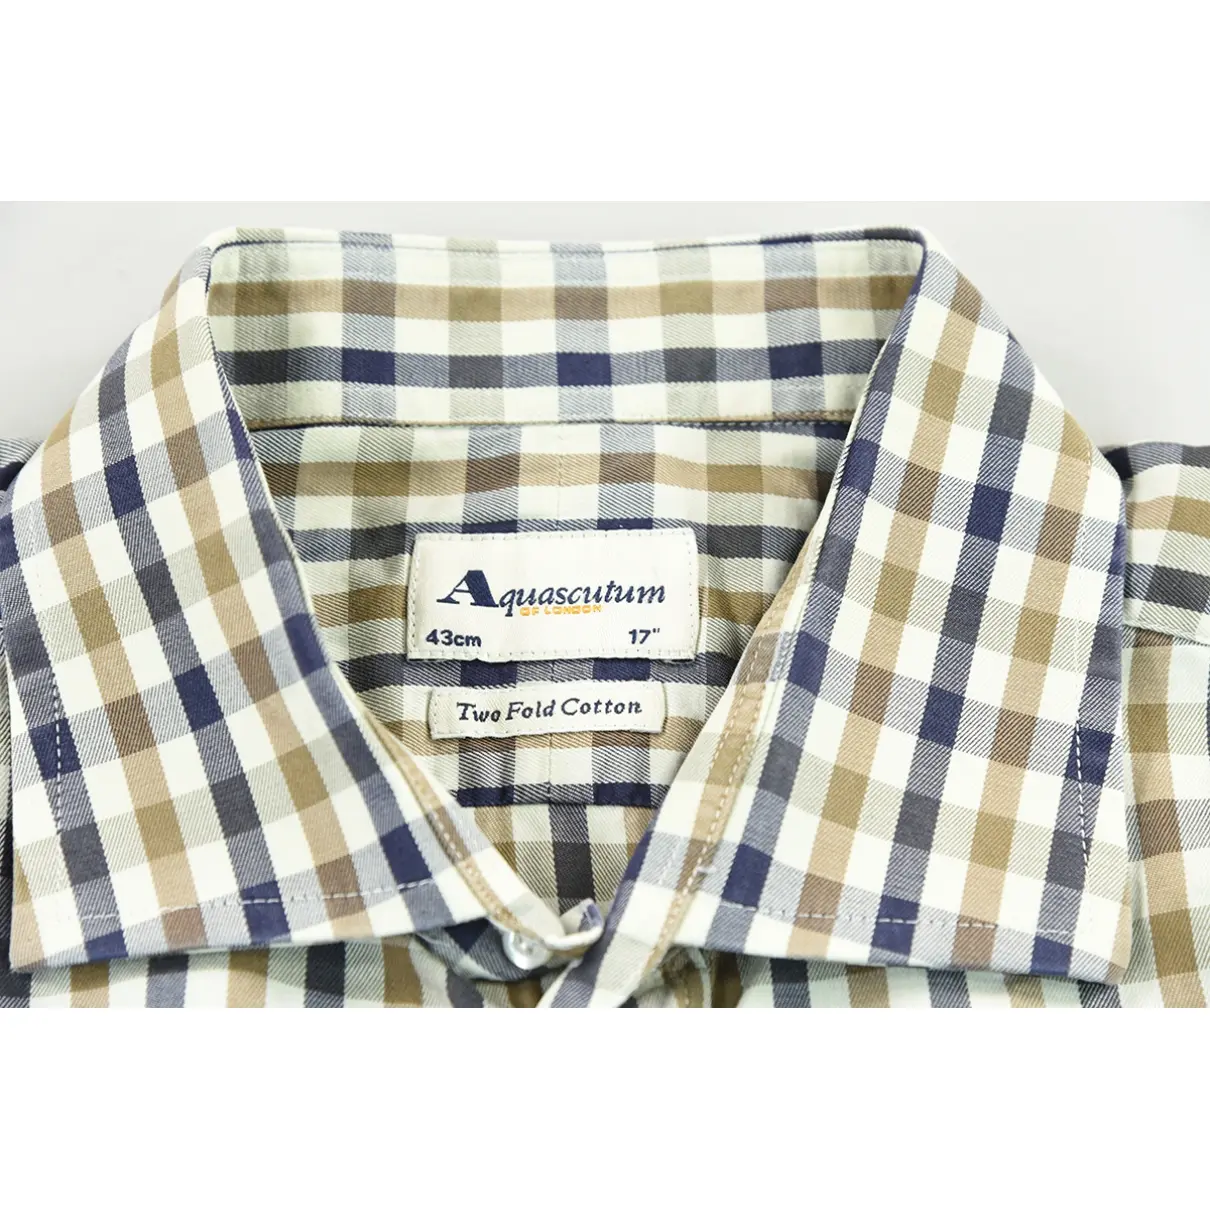 Buy Aquascutum Shirt online - Vintage